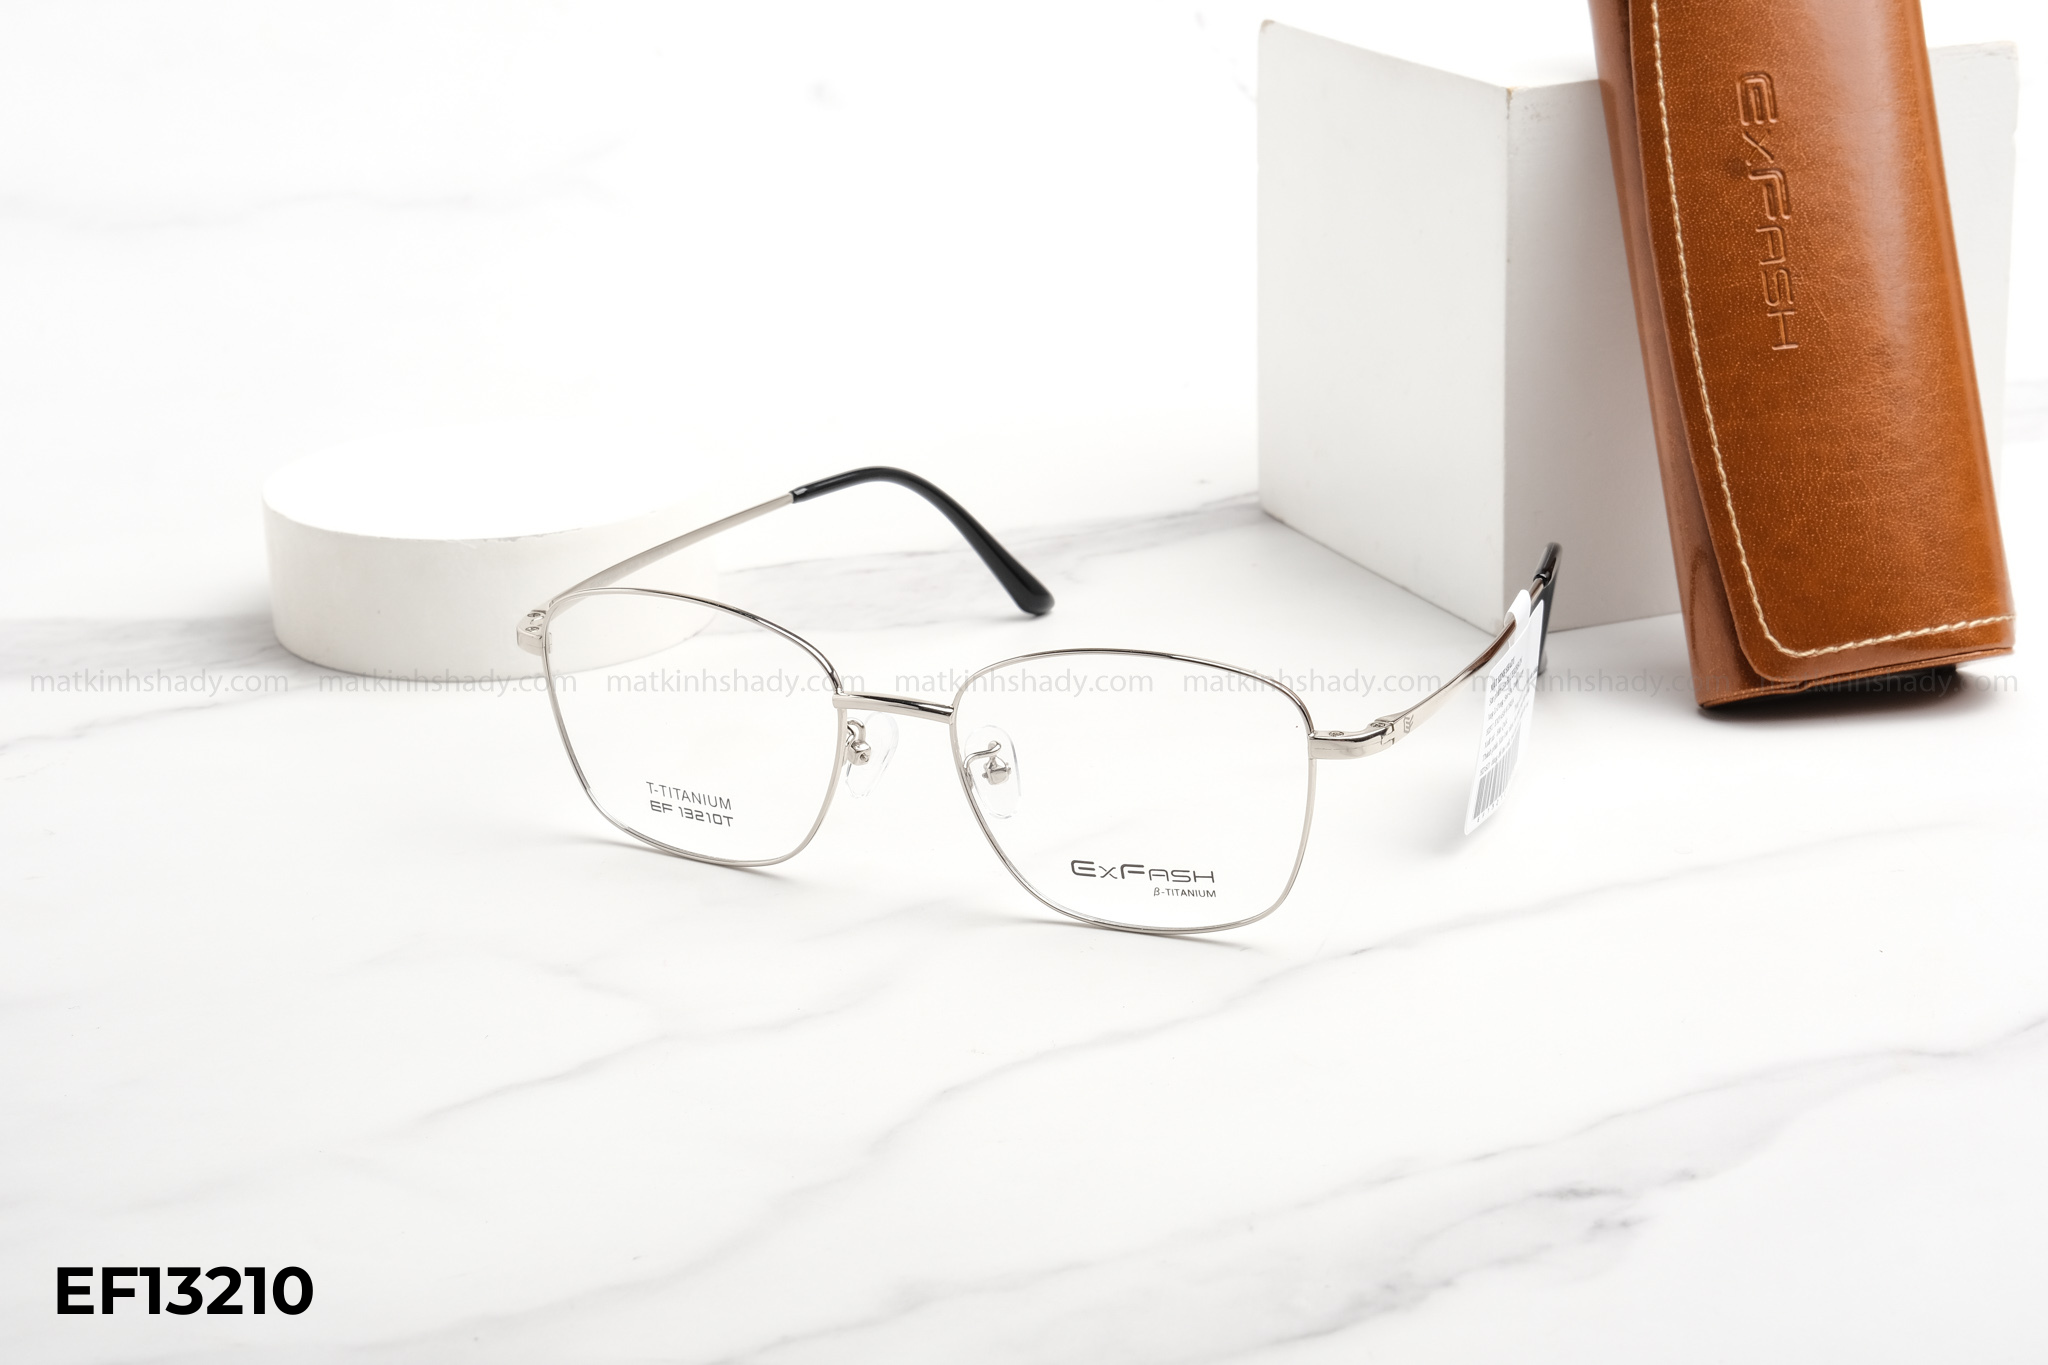  Exfash Eyewear - Glasses - EF13210 